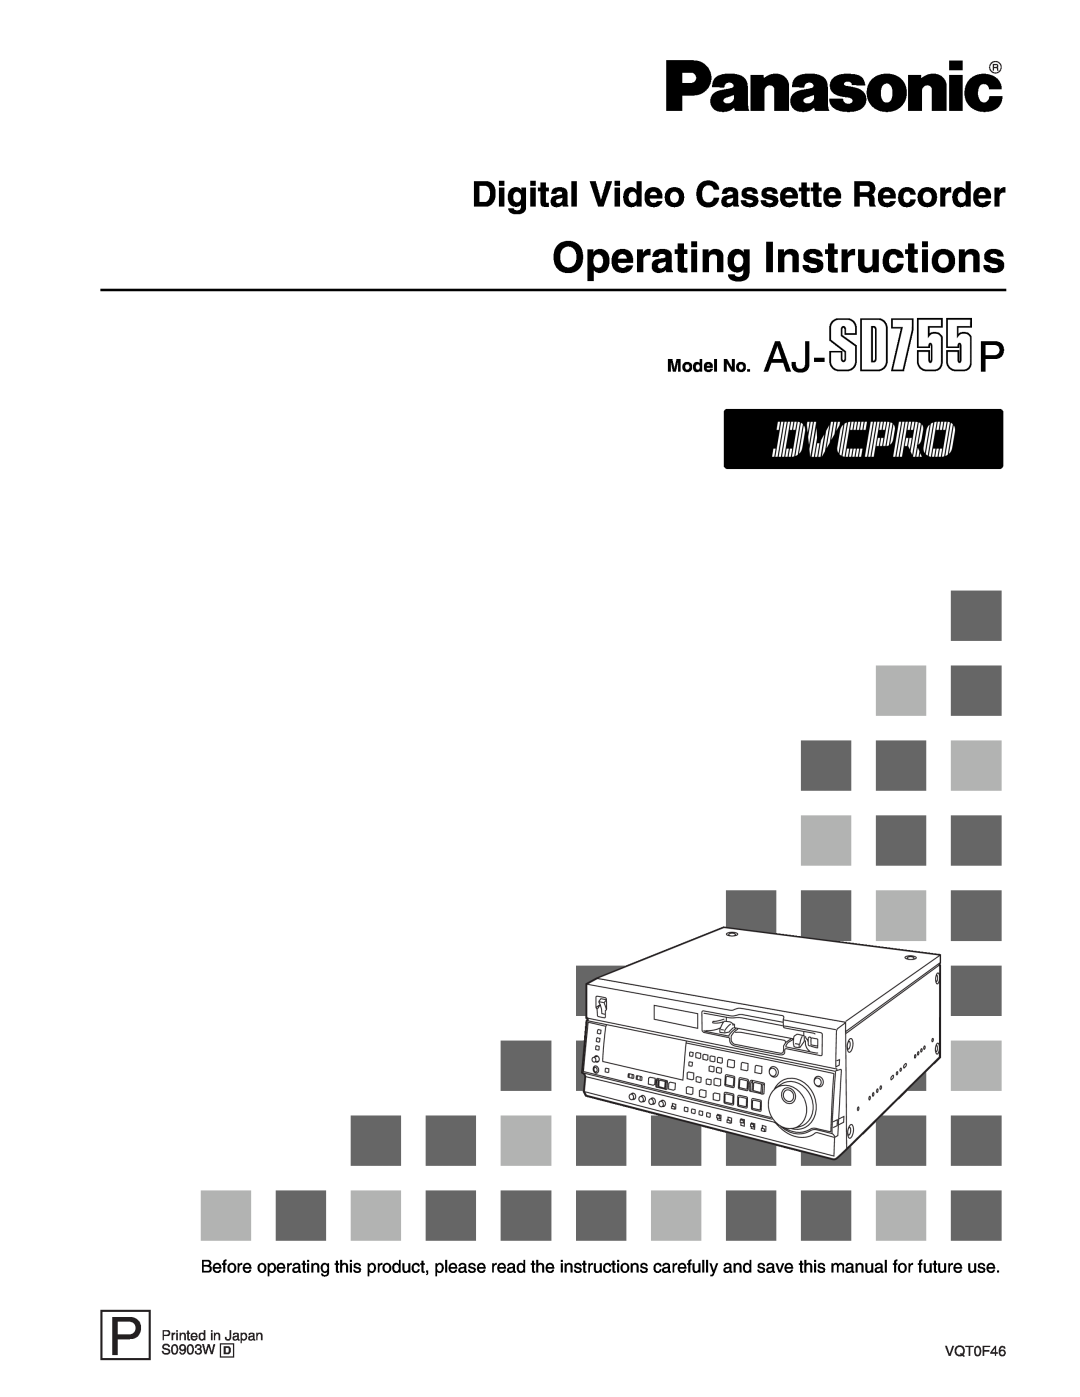 Panasonic AJ-SD755 operating instructions Model No. AJ-P, Operating Instructions, Digital Video Cassette Recorder 